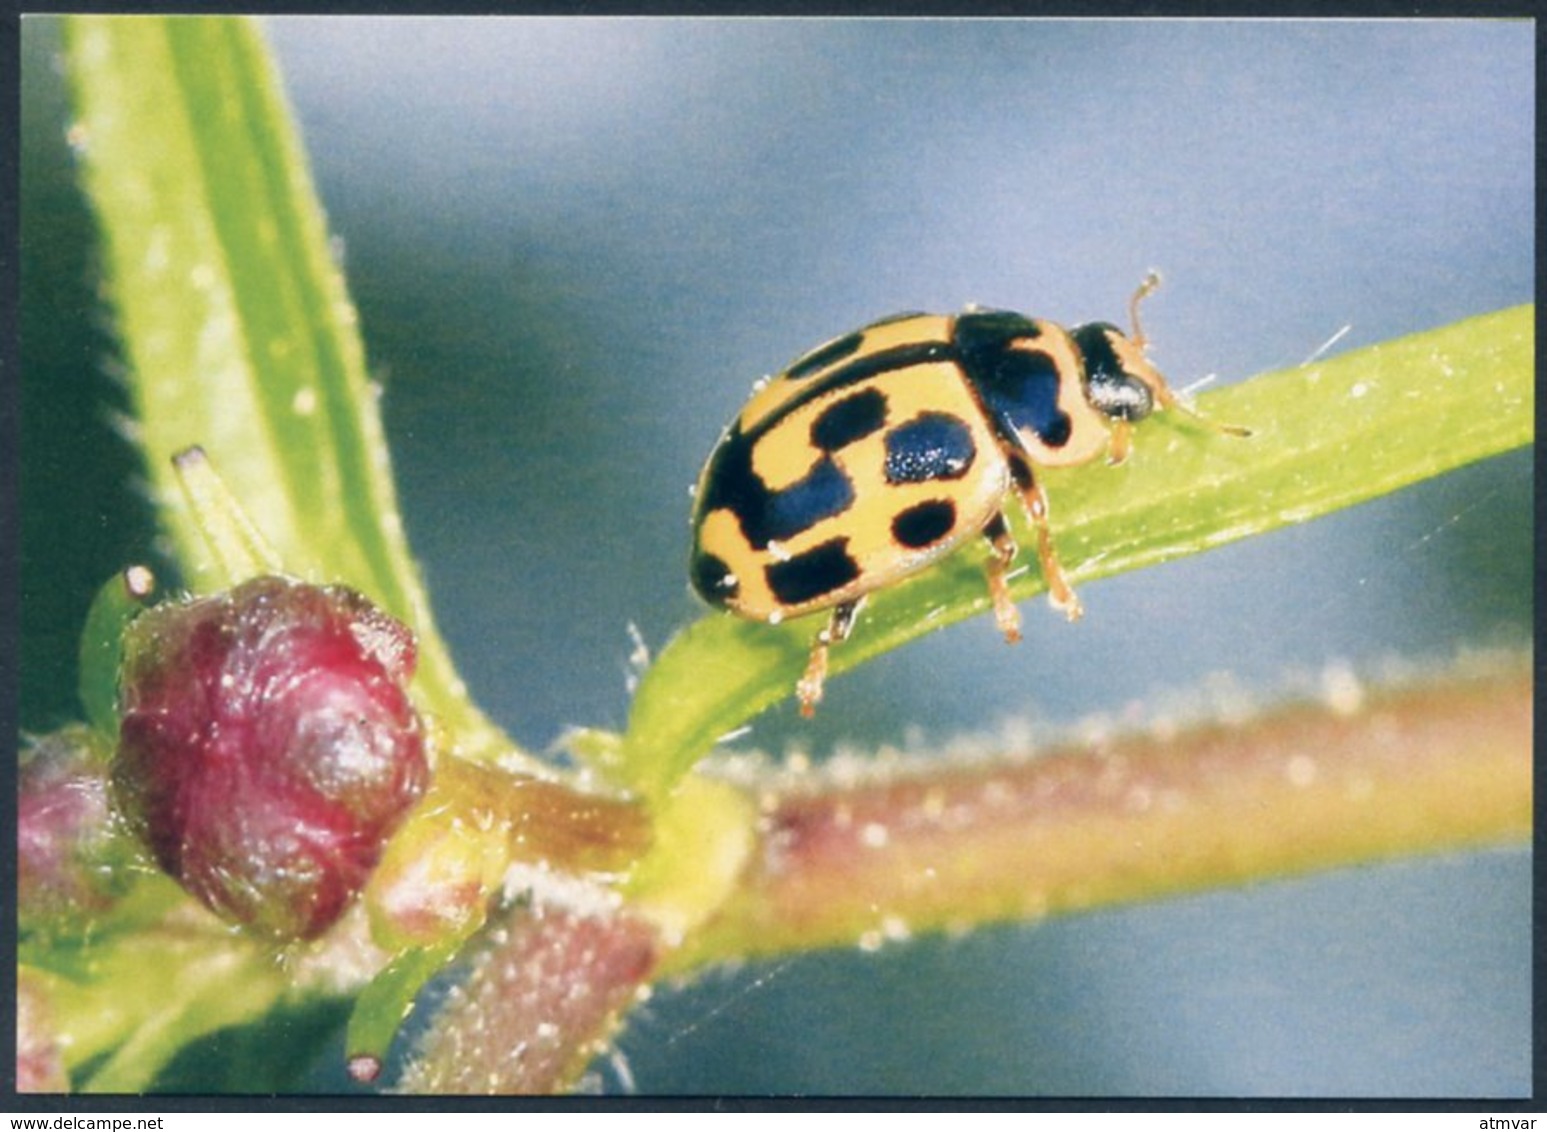 14-spotted Ladybird, Propylea Quatuordecimpunctata, Coccinelle à Damier, Vierzehnpunkt-Marienkäfer, Mariquita - Insectos